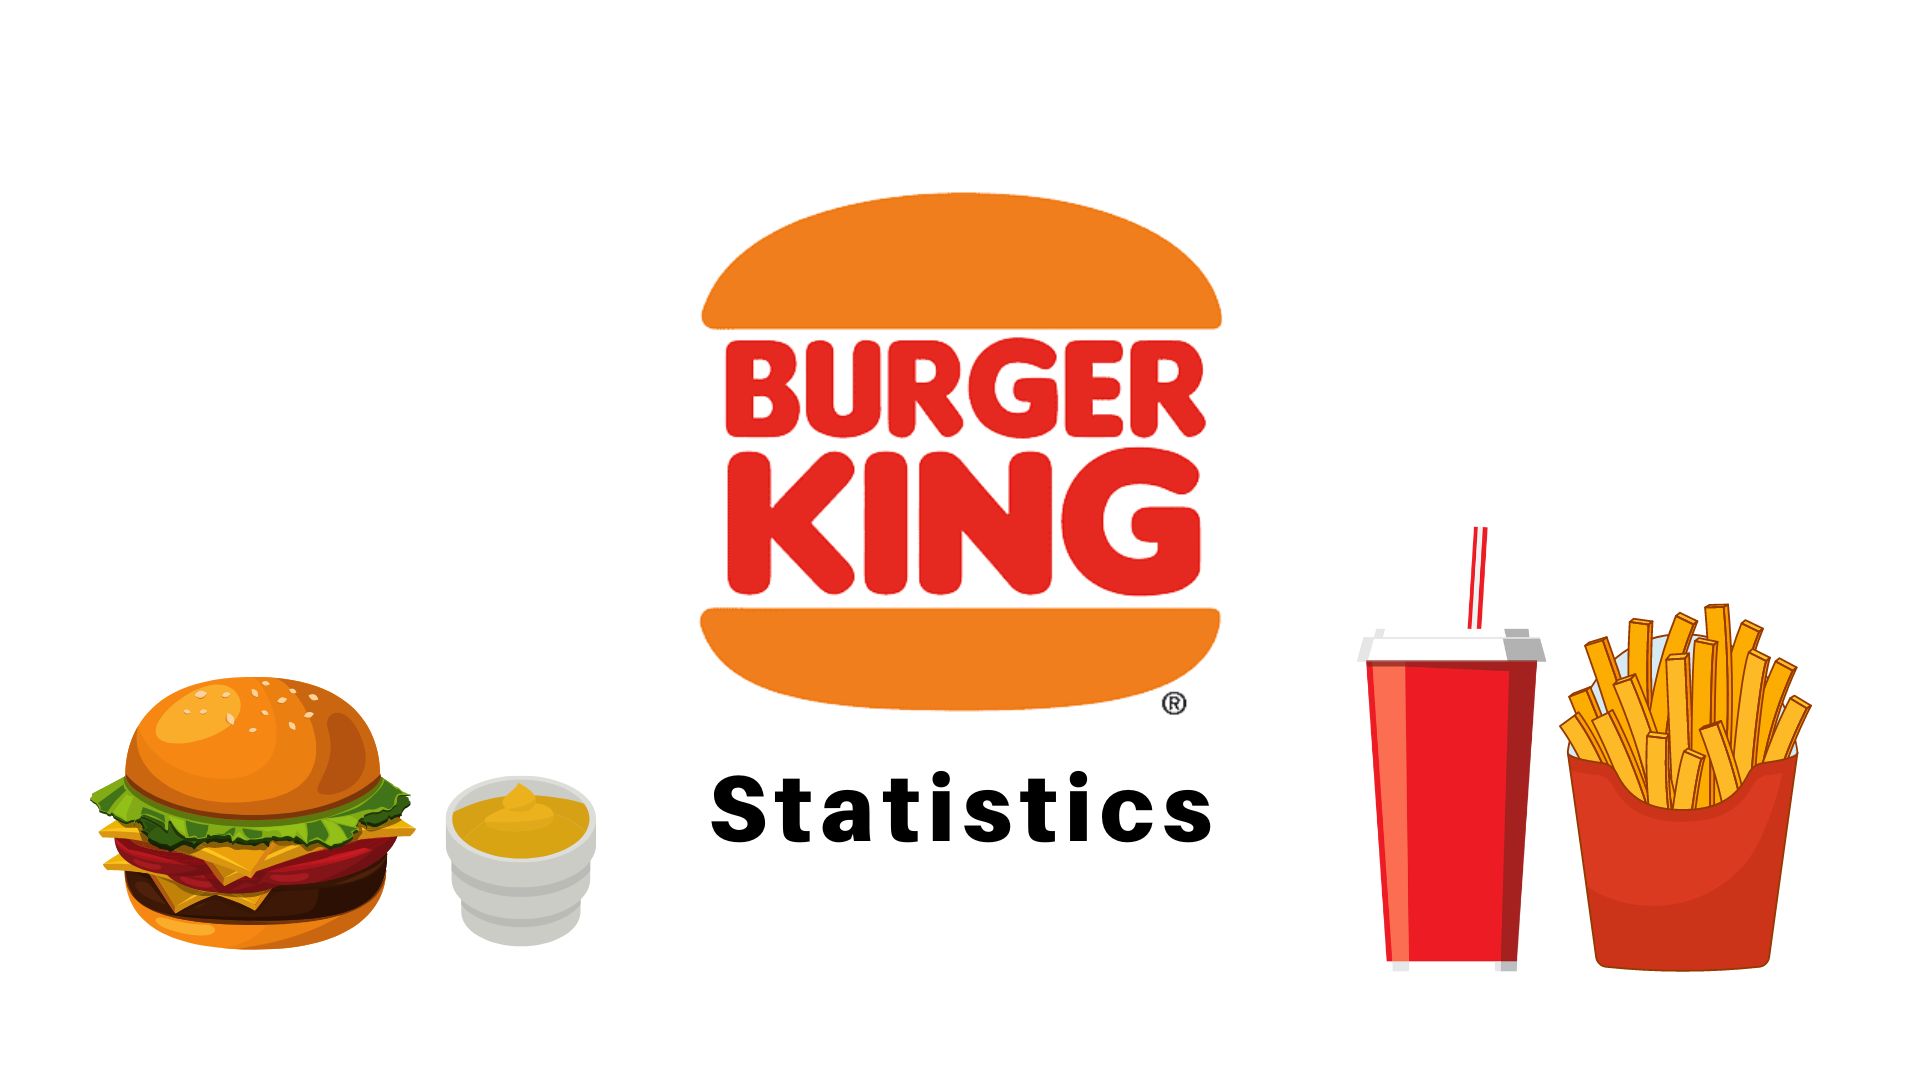 Slow pan of a Burger King logo hanging i... | Stock Video | Pond5